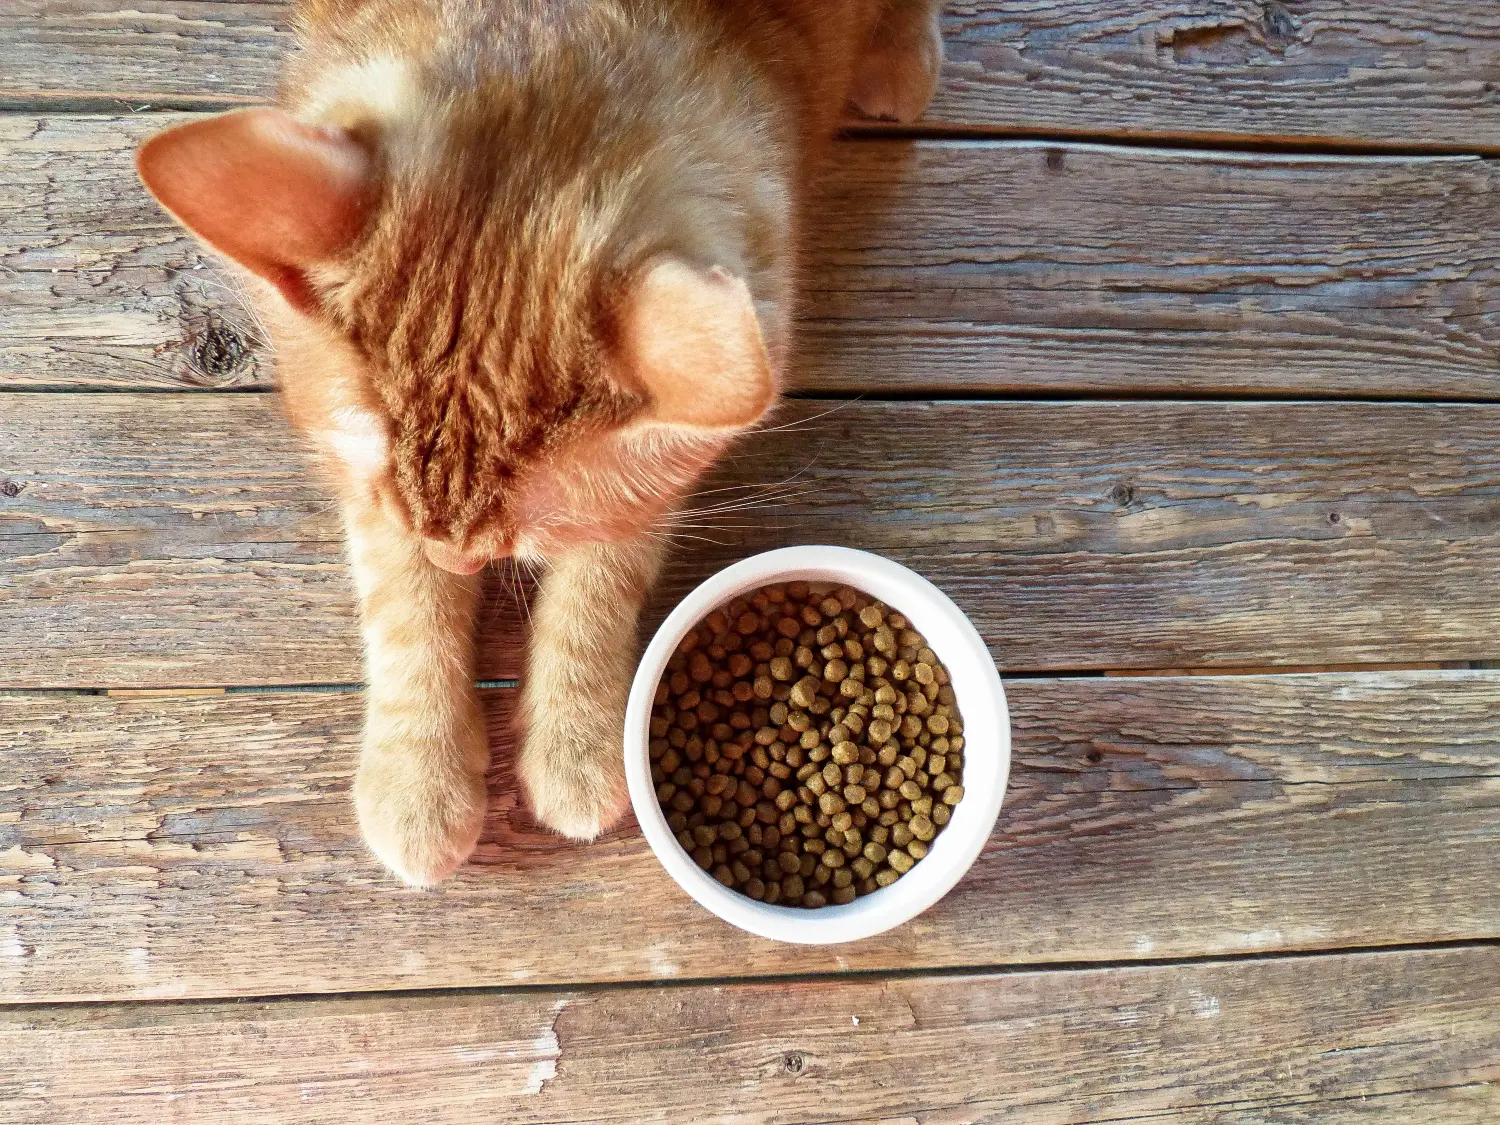 Cat sitting next to cat food bowl